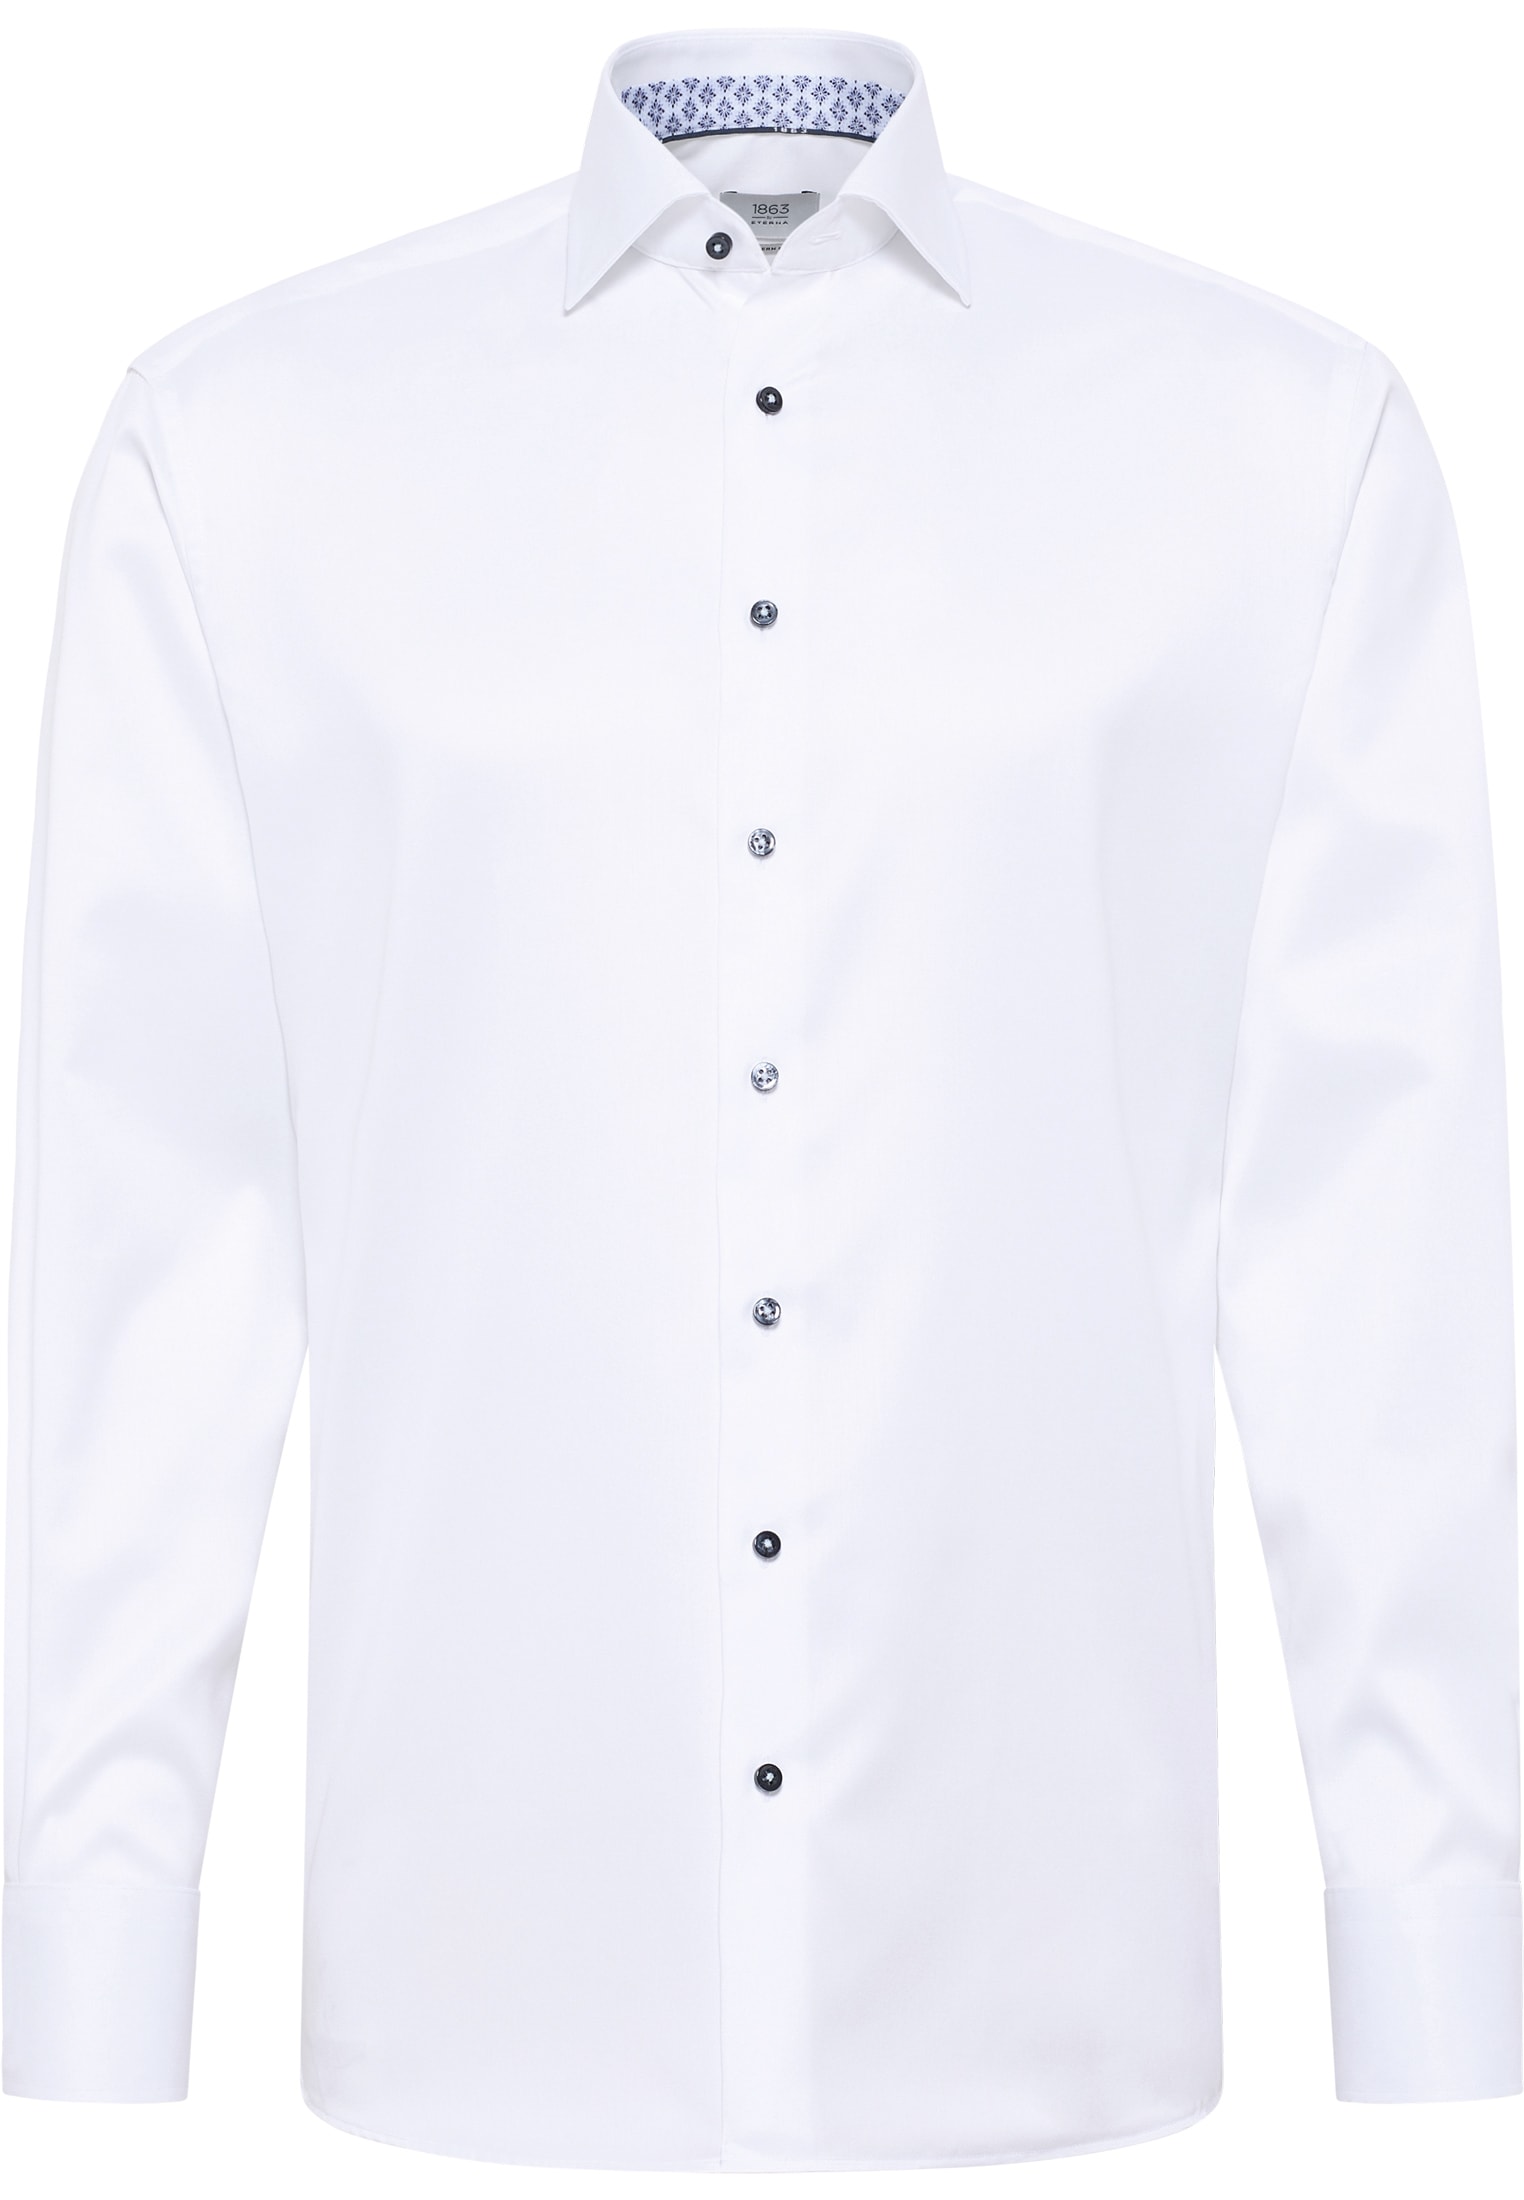 MODERN FIT Luxury Shirt in white plain